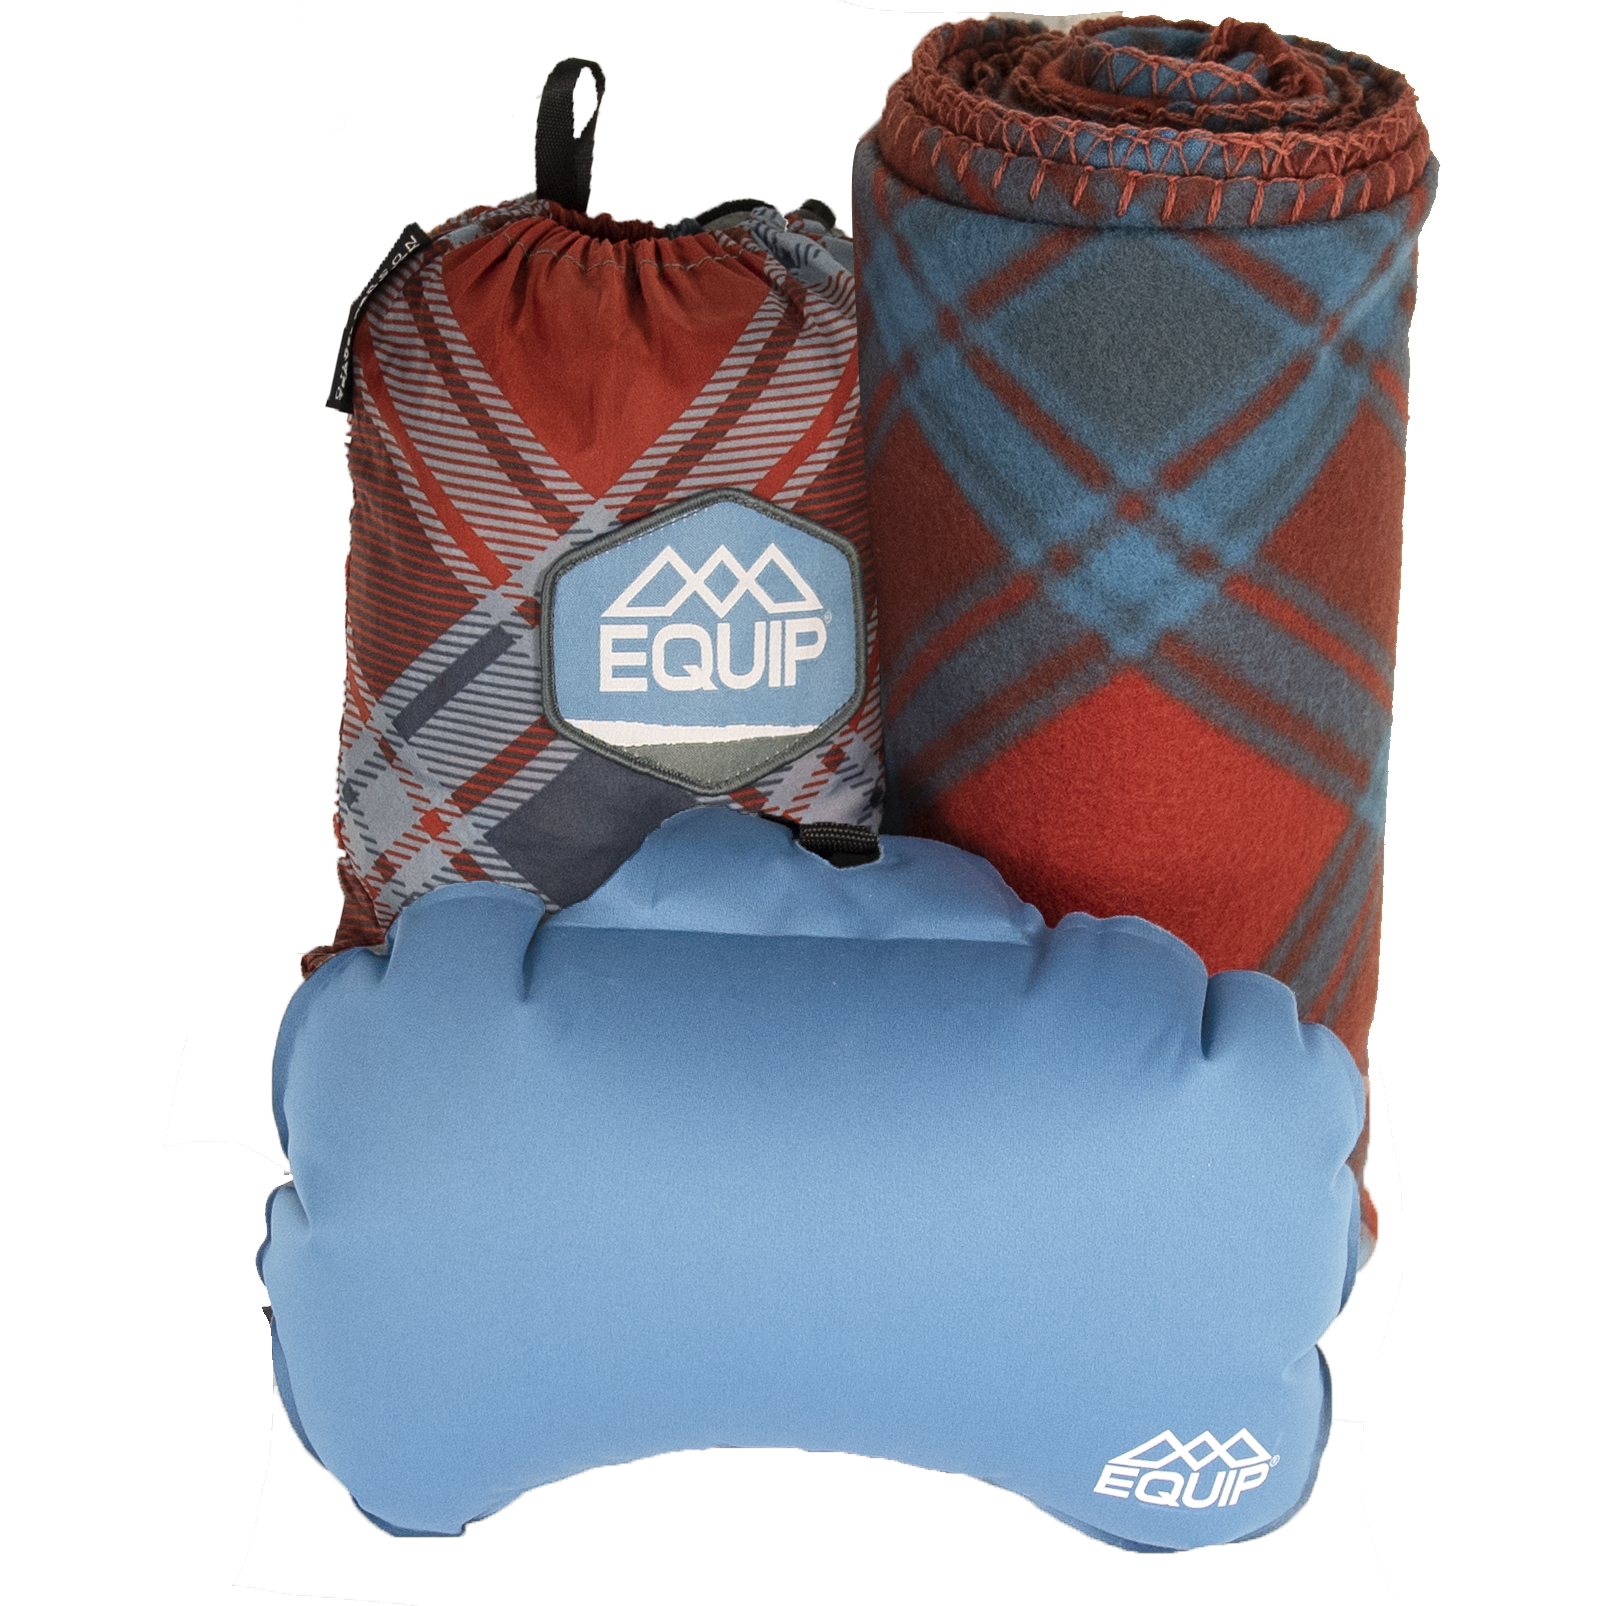 Equip Bundle Nylon 1-Person Hammock, Fleece Blanket, Pillow, Blue and Orange, Size 108" L x 56" W $10 + FS w/ W+